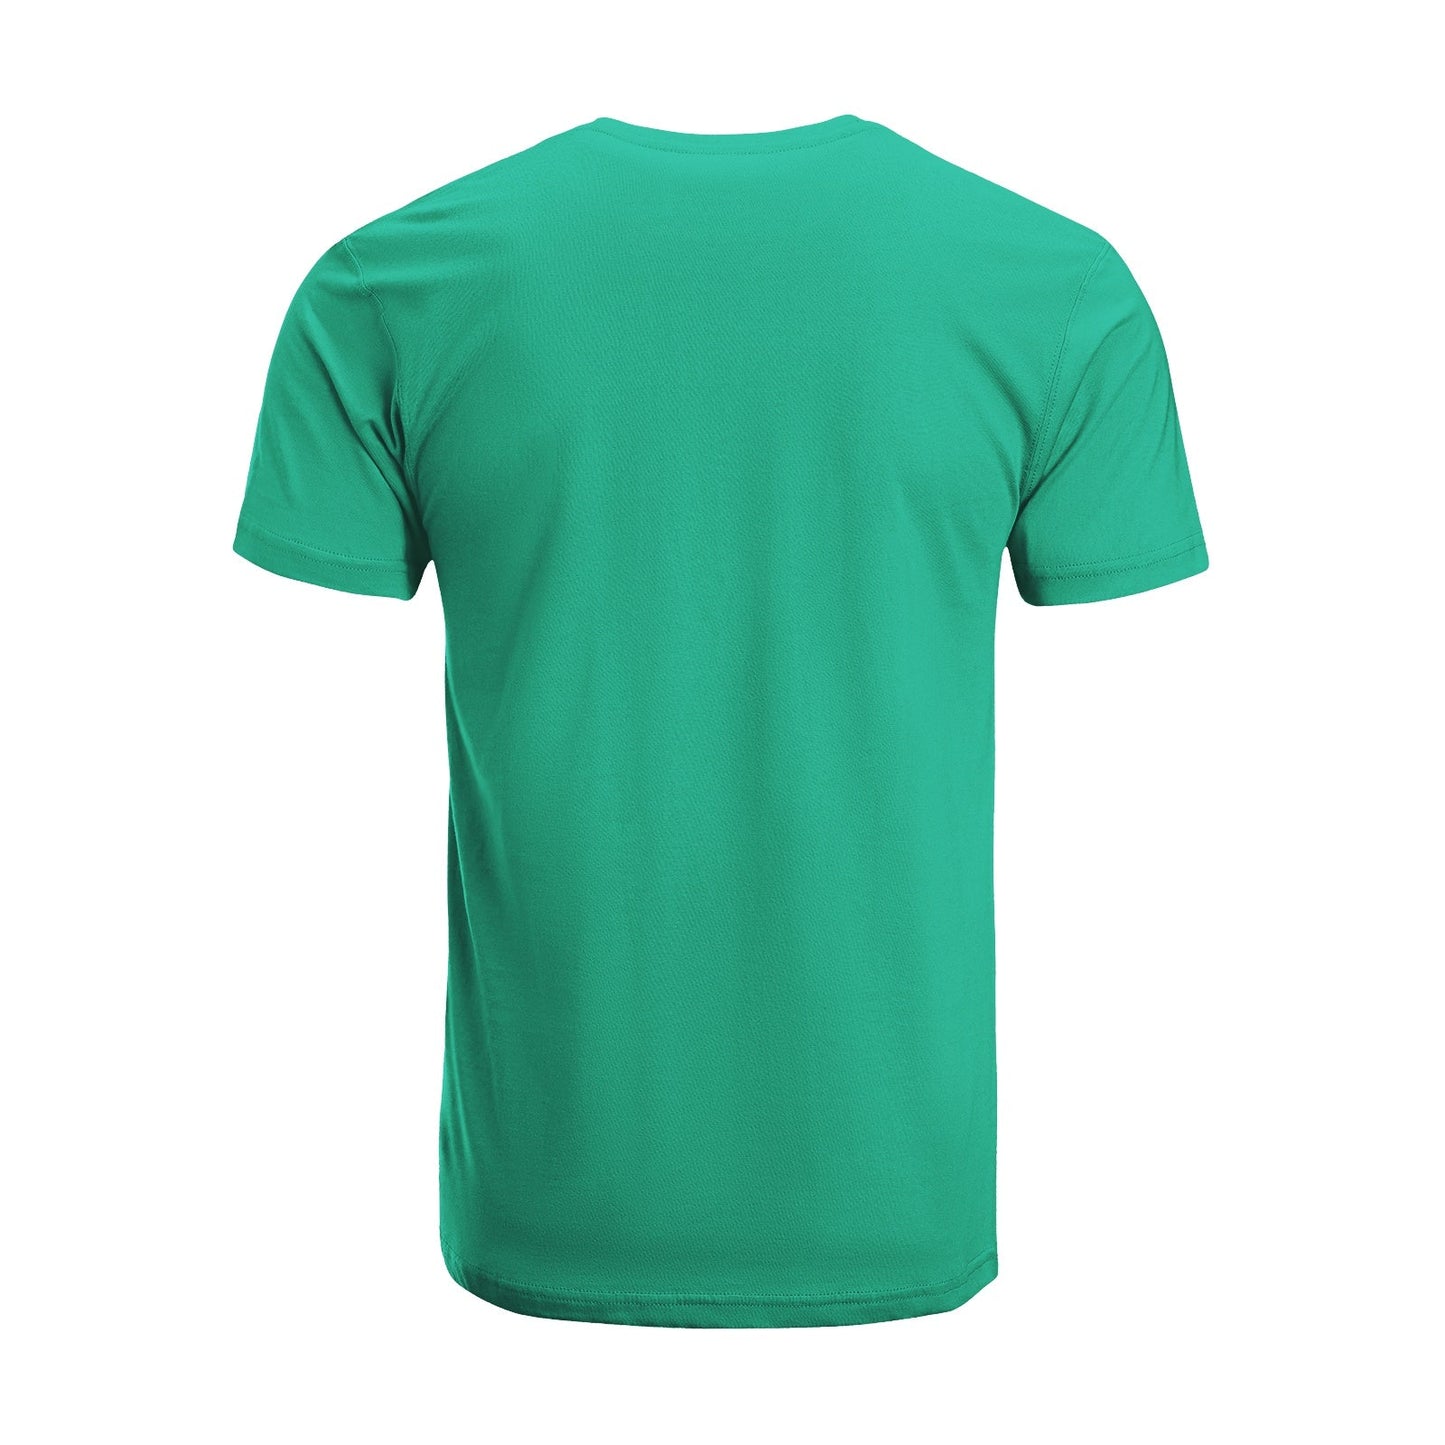 Unisex Short Sleeve Crew Neck Cotton Jersey T-Shirt DOG 02 - Tara-Outfits.com